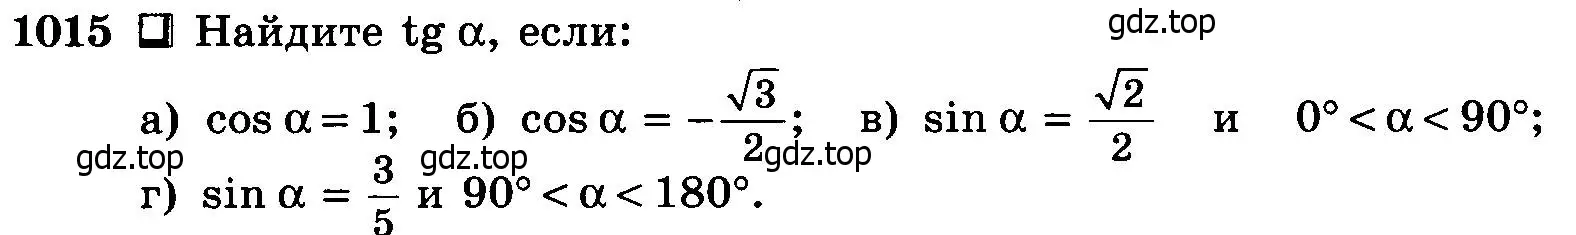 Условие номер 1015 (страница 251) гдз по геометрии 7-9 класс Атанасян, Бутузов, учебник